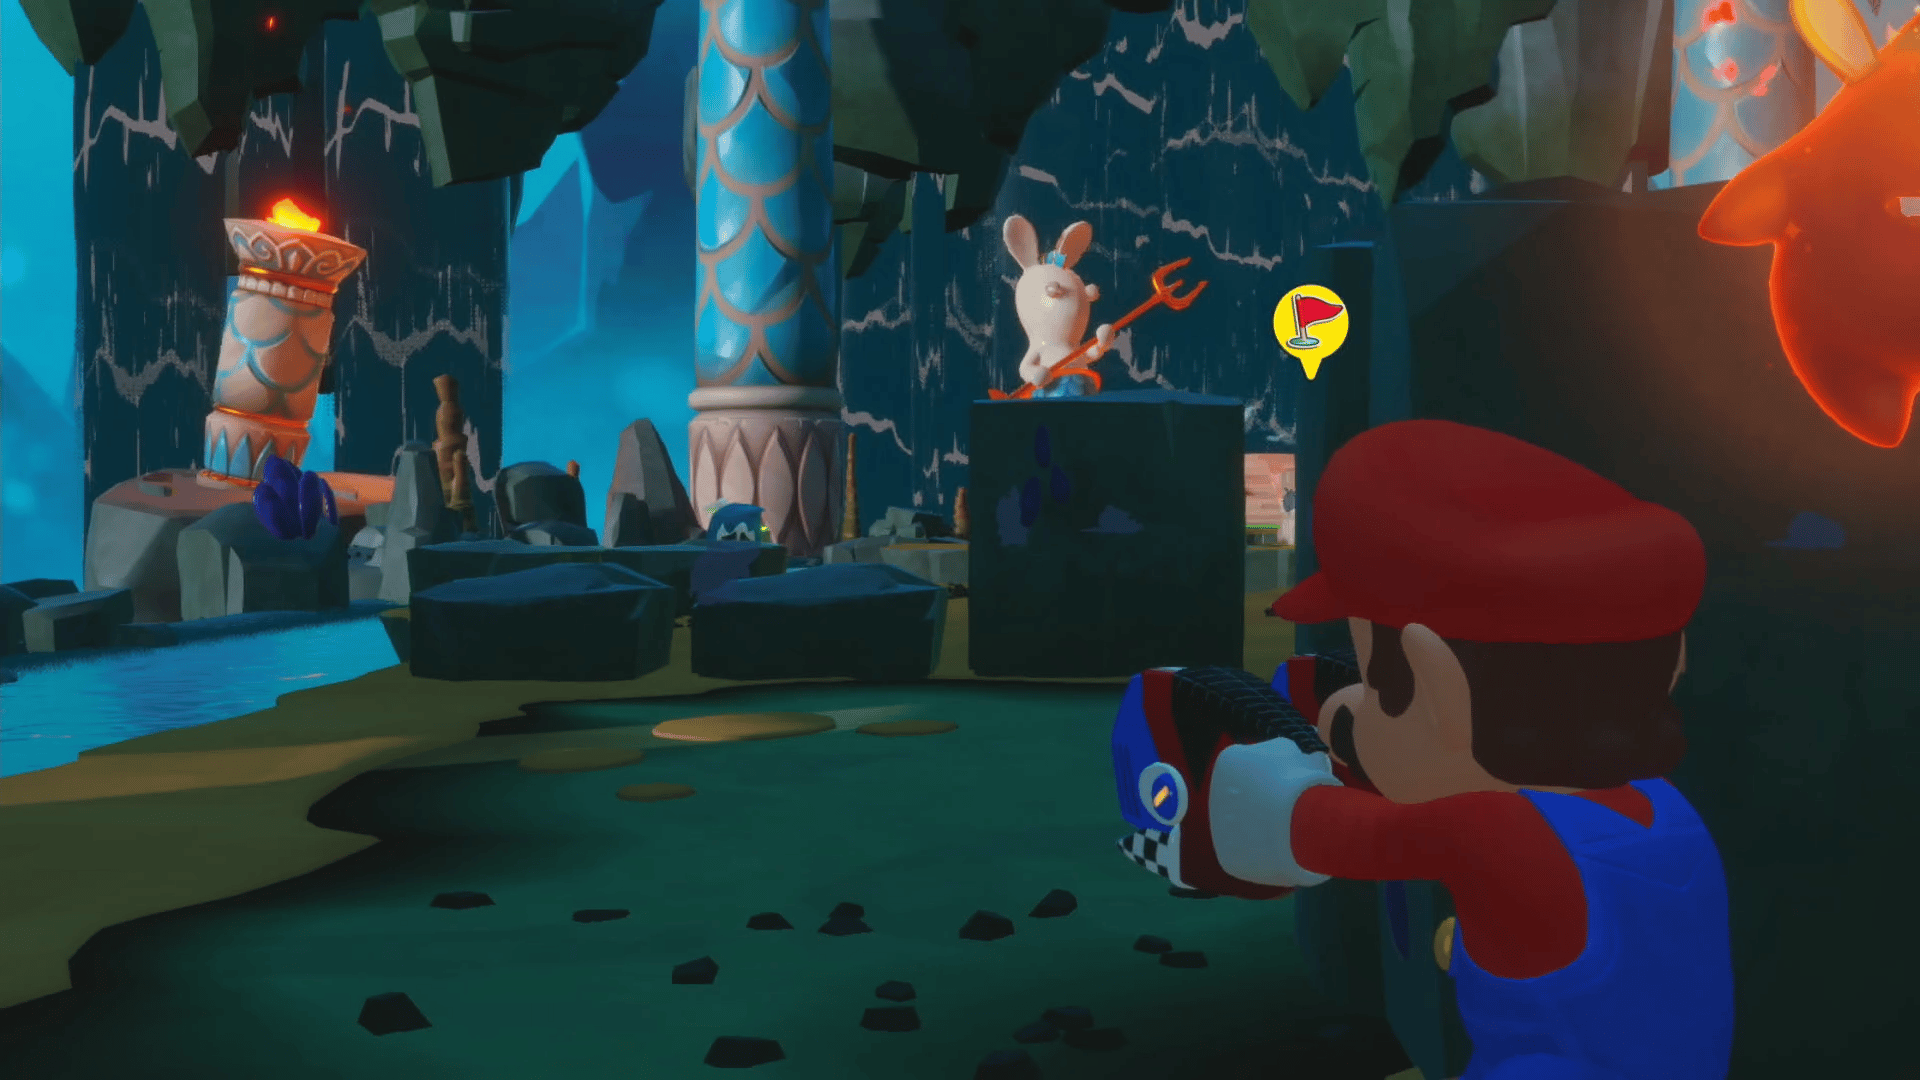 Mario + Rabbids: Sparks Of Hope Review - A Mario Galaxy - Noisy Pixel